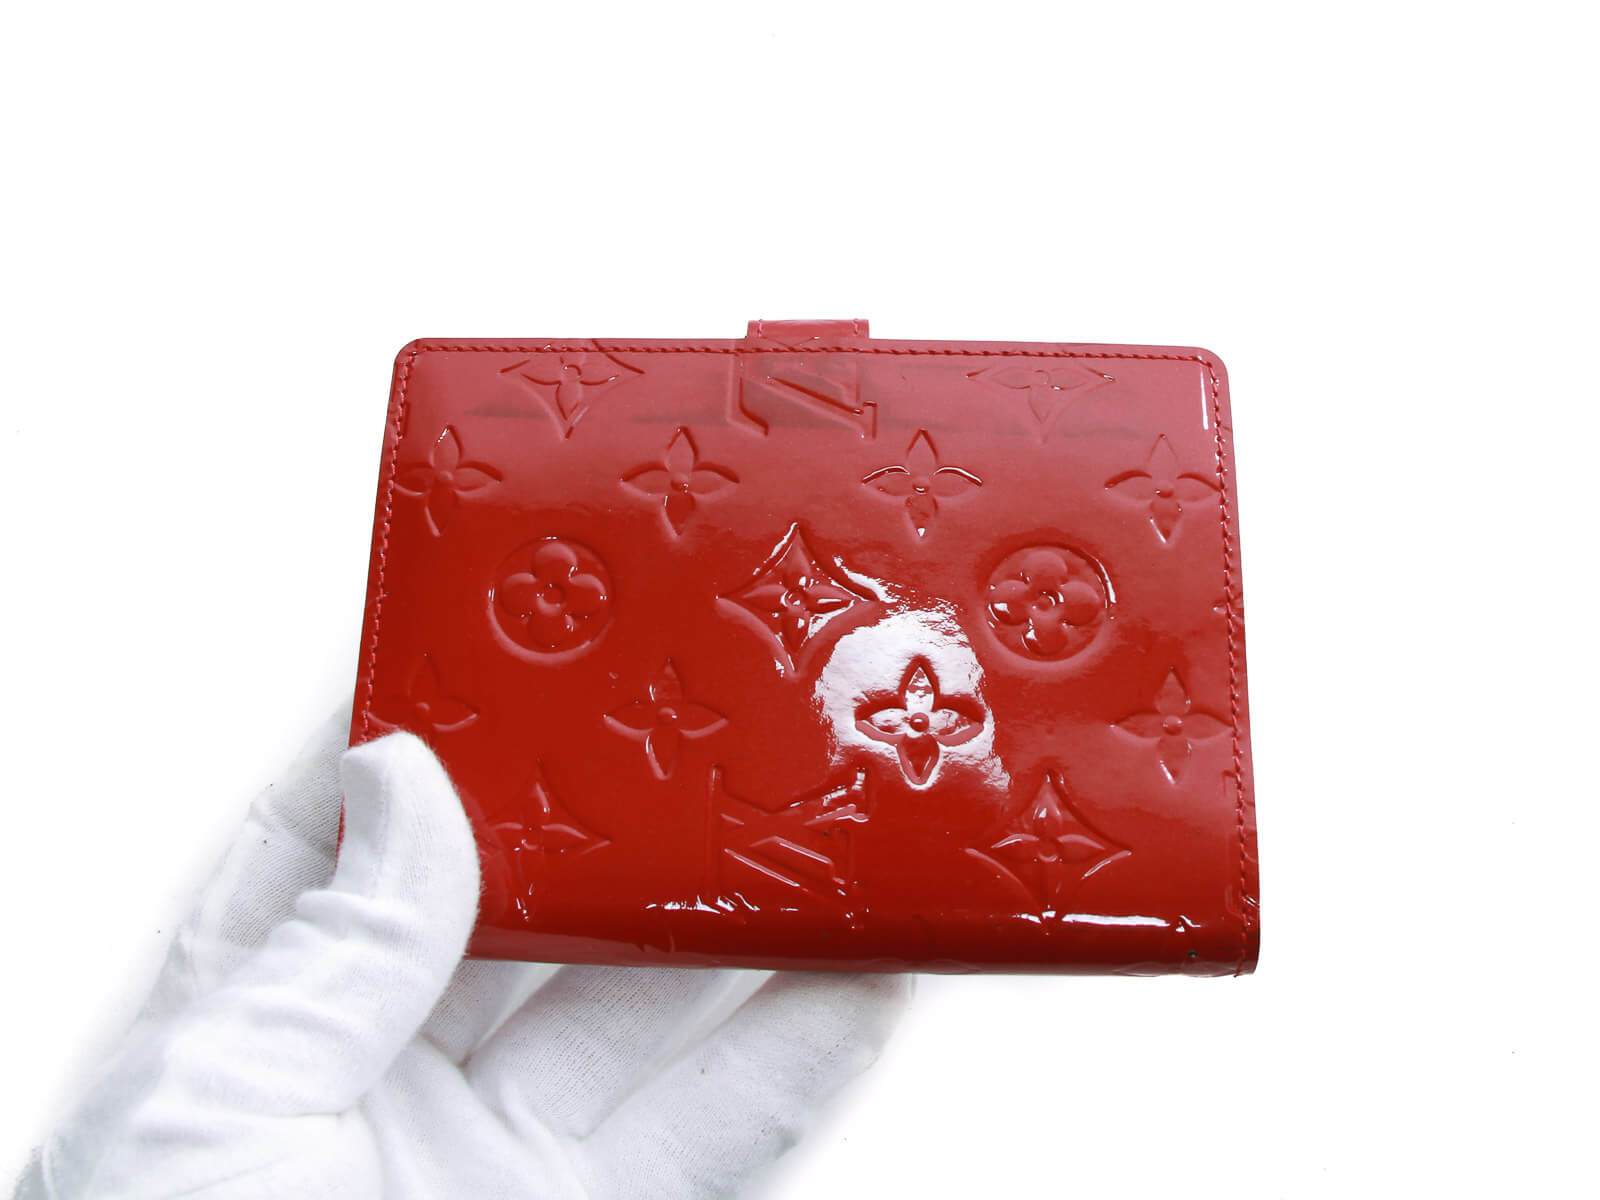 Louis Vuitton // Red Monogram Vernis Agenda & Passport Holder